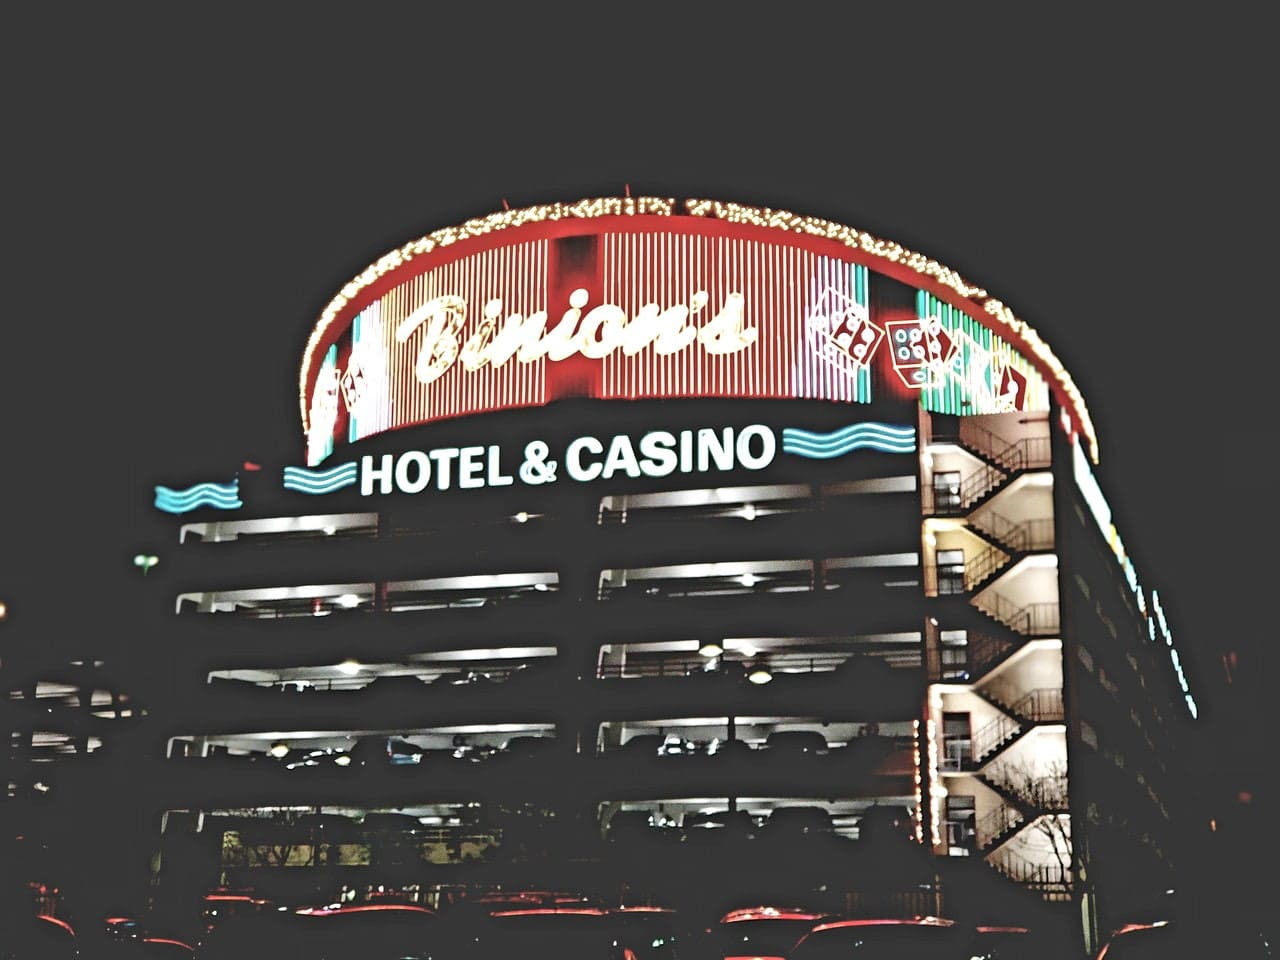 binion’s horseshoe casino